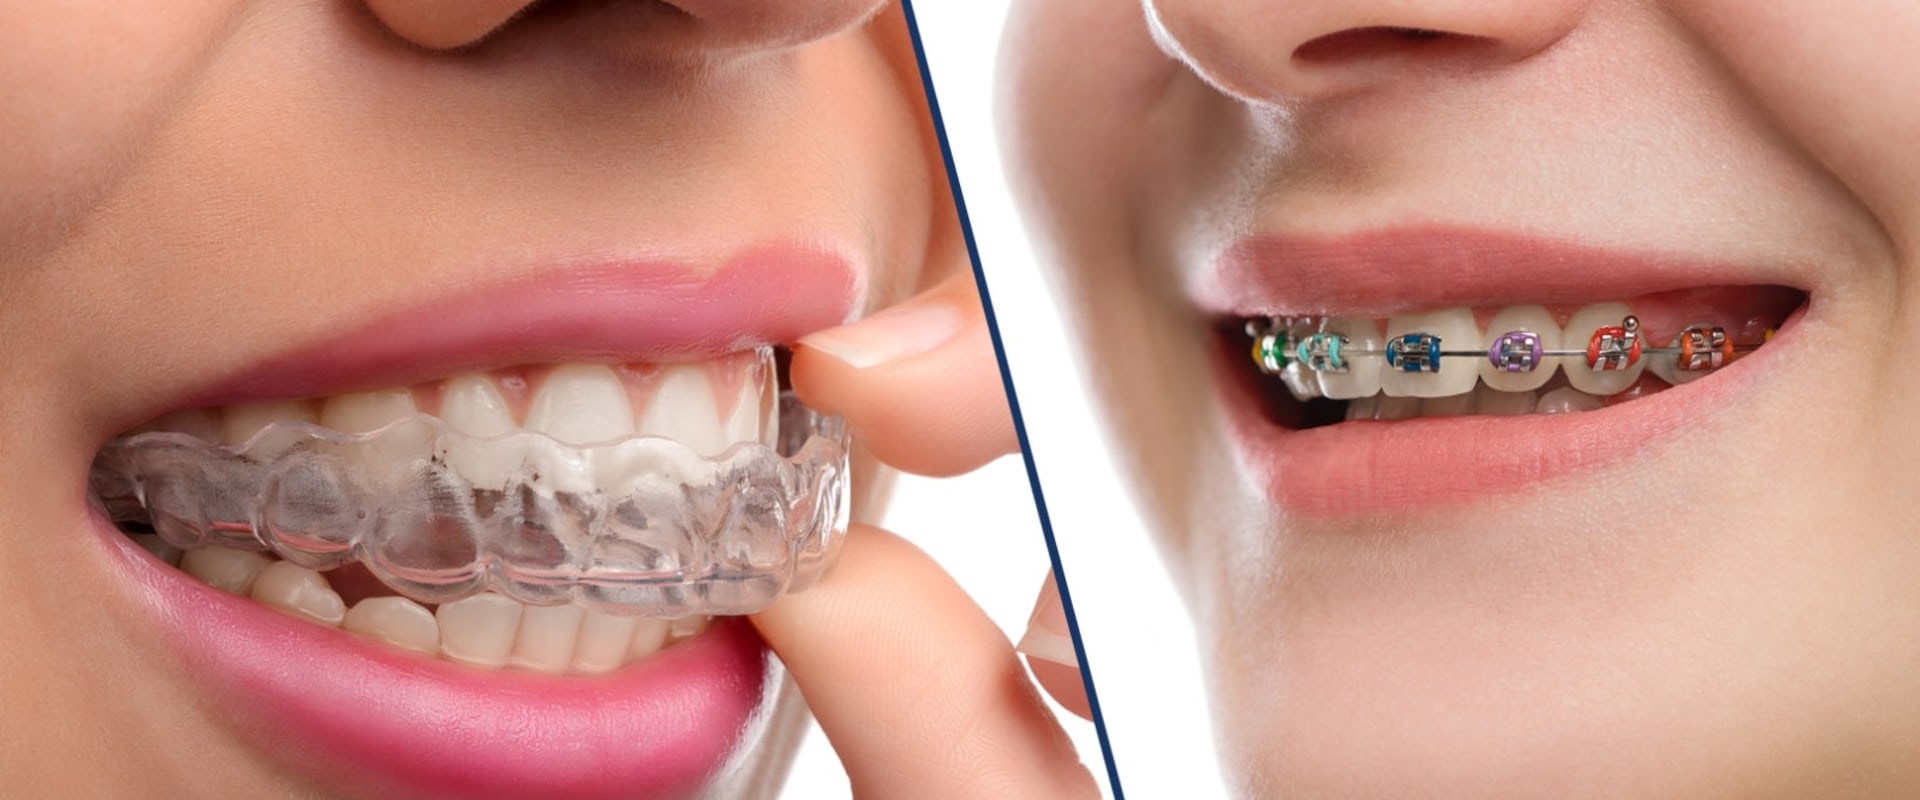 Do braces take longer than invisalign?